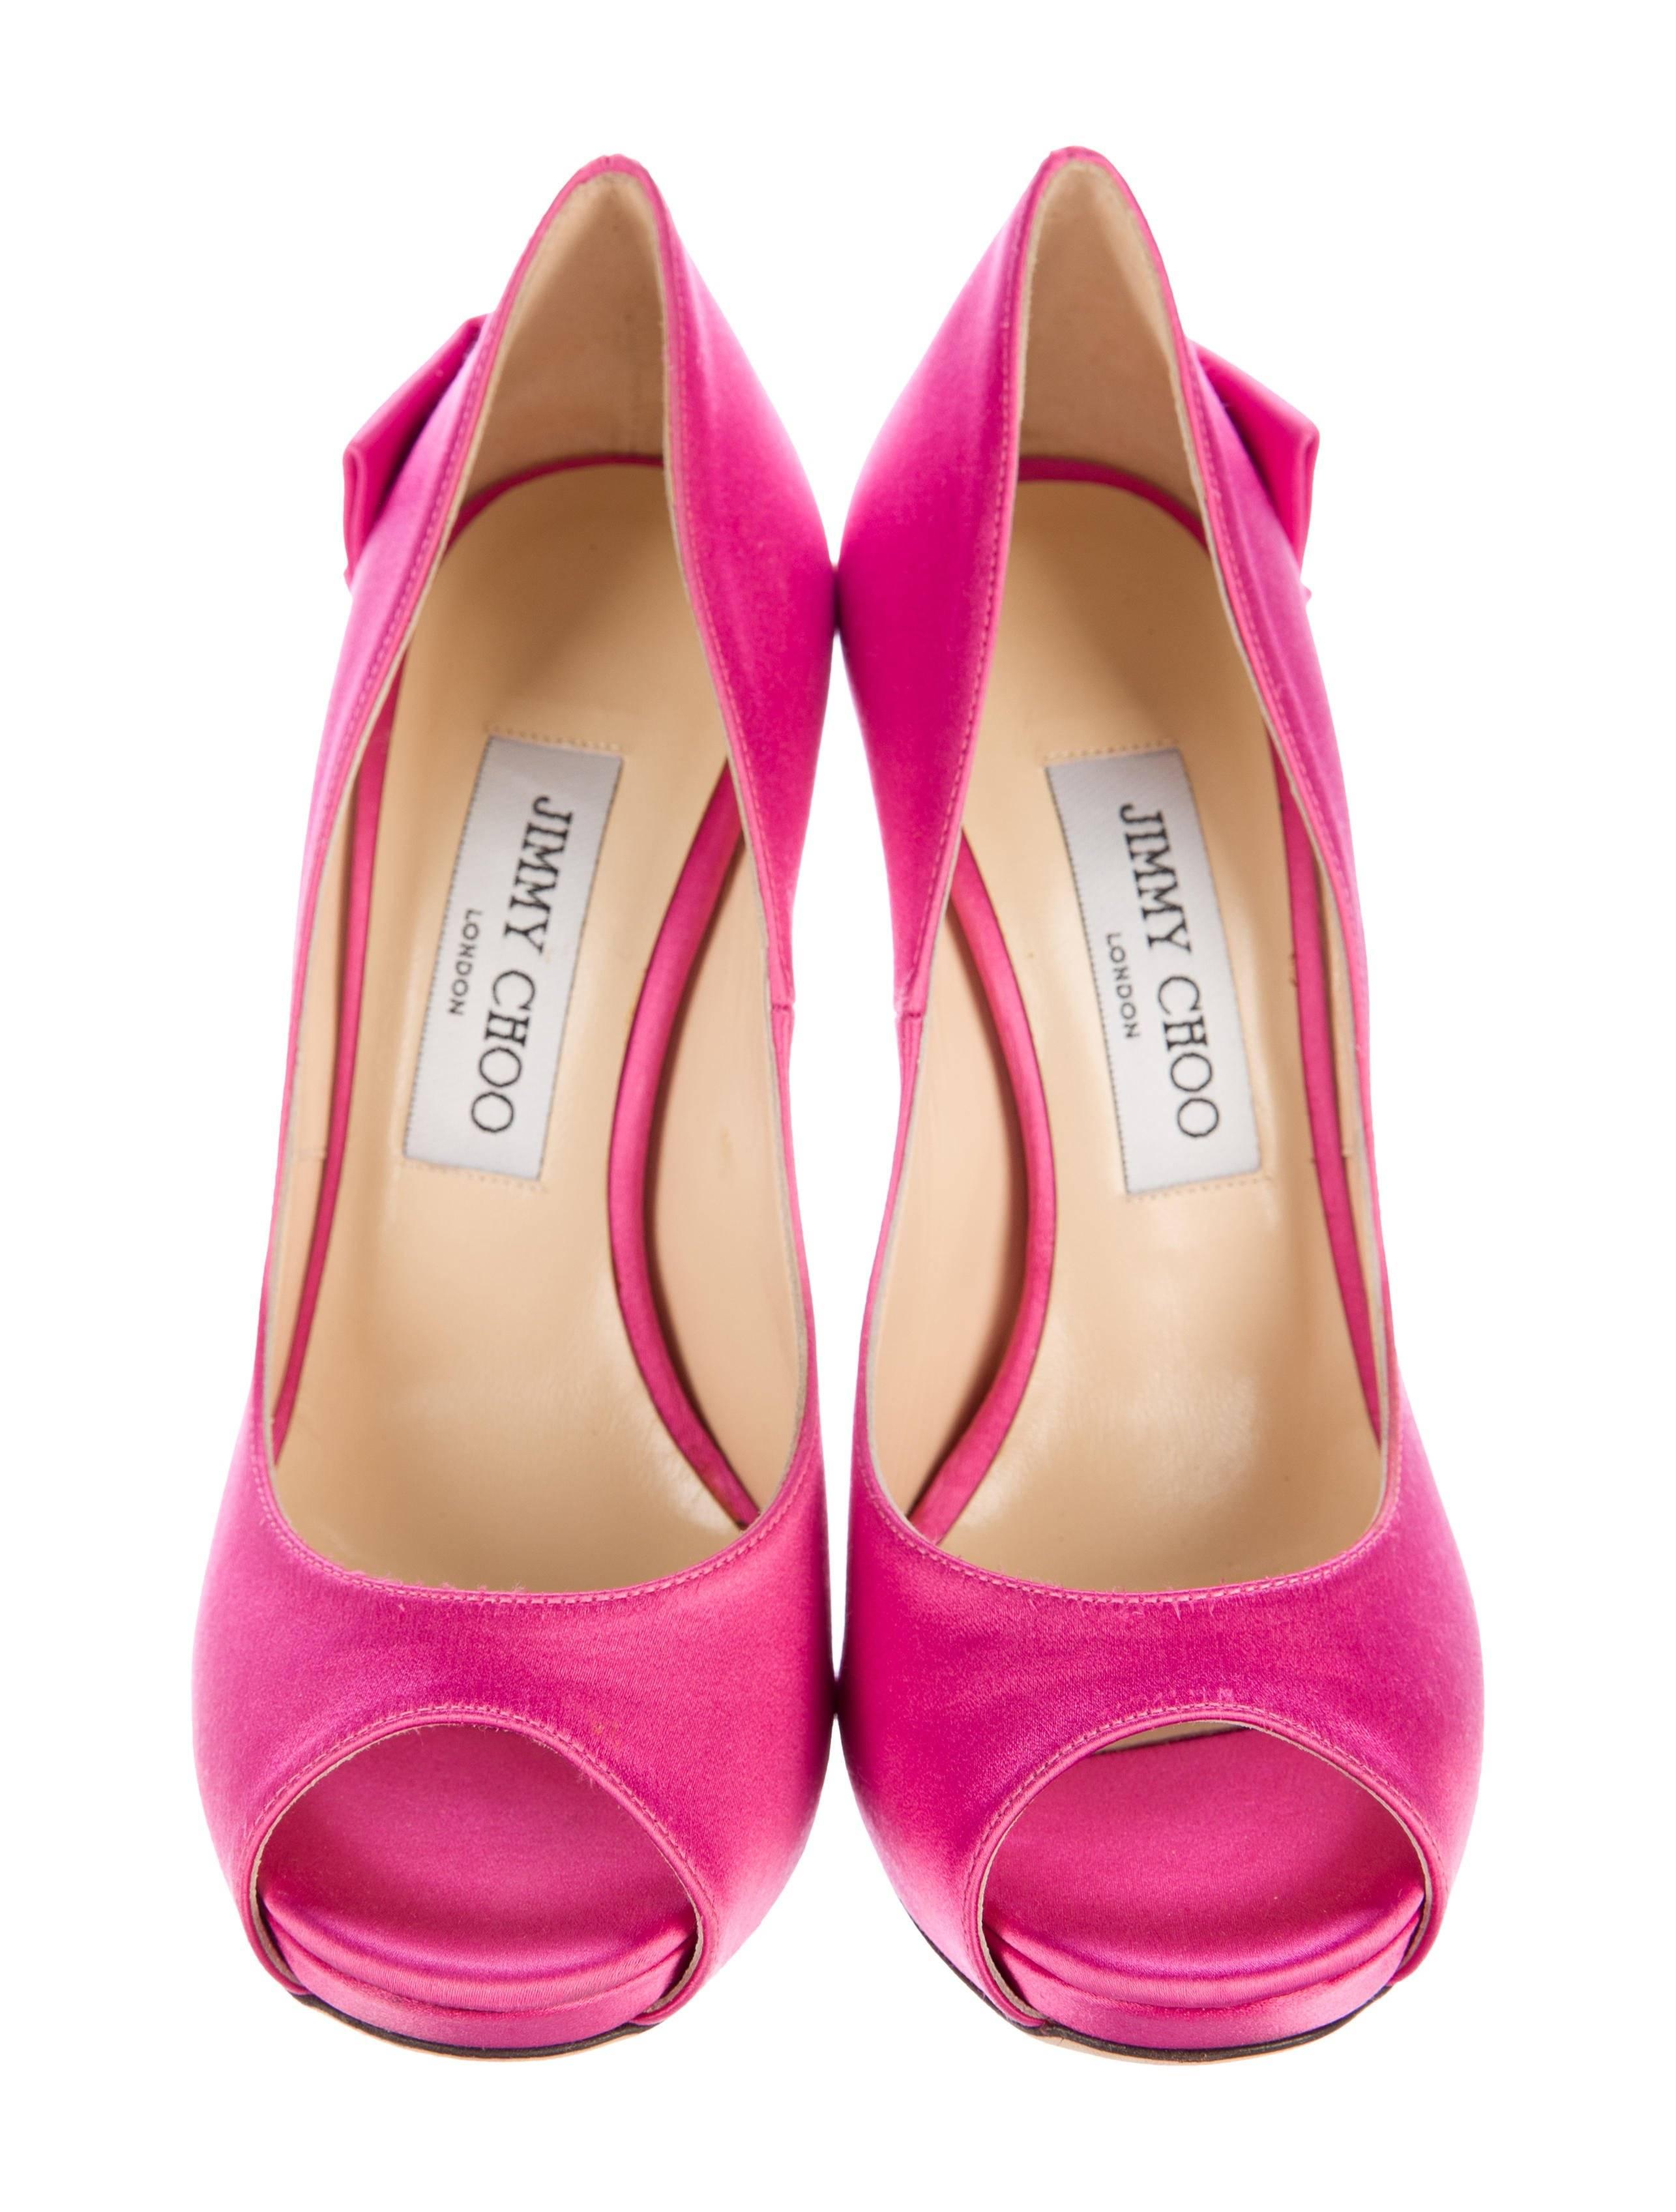 jimmy choo pink bow heels